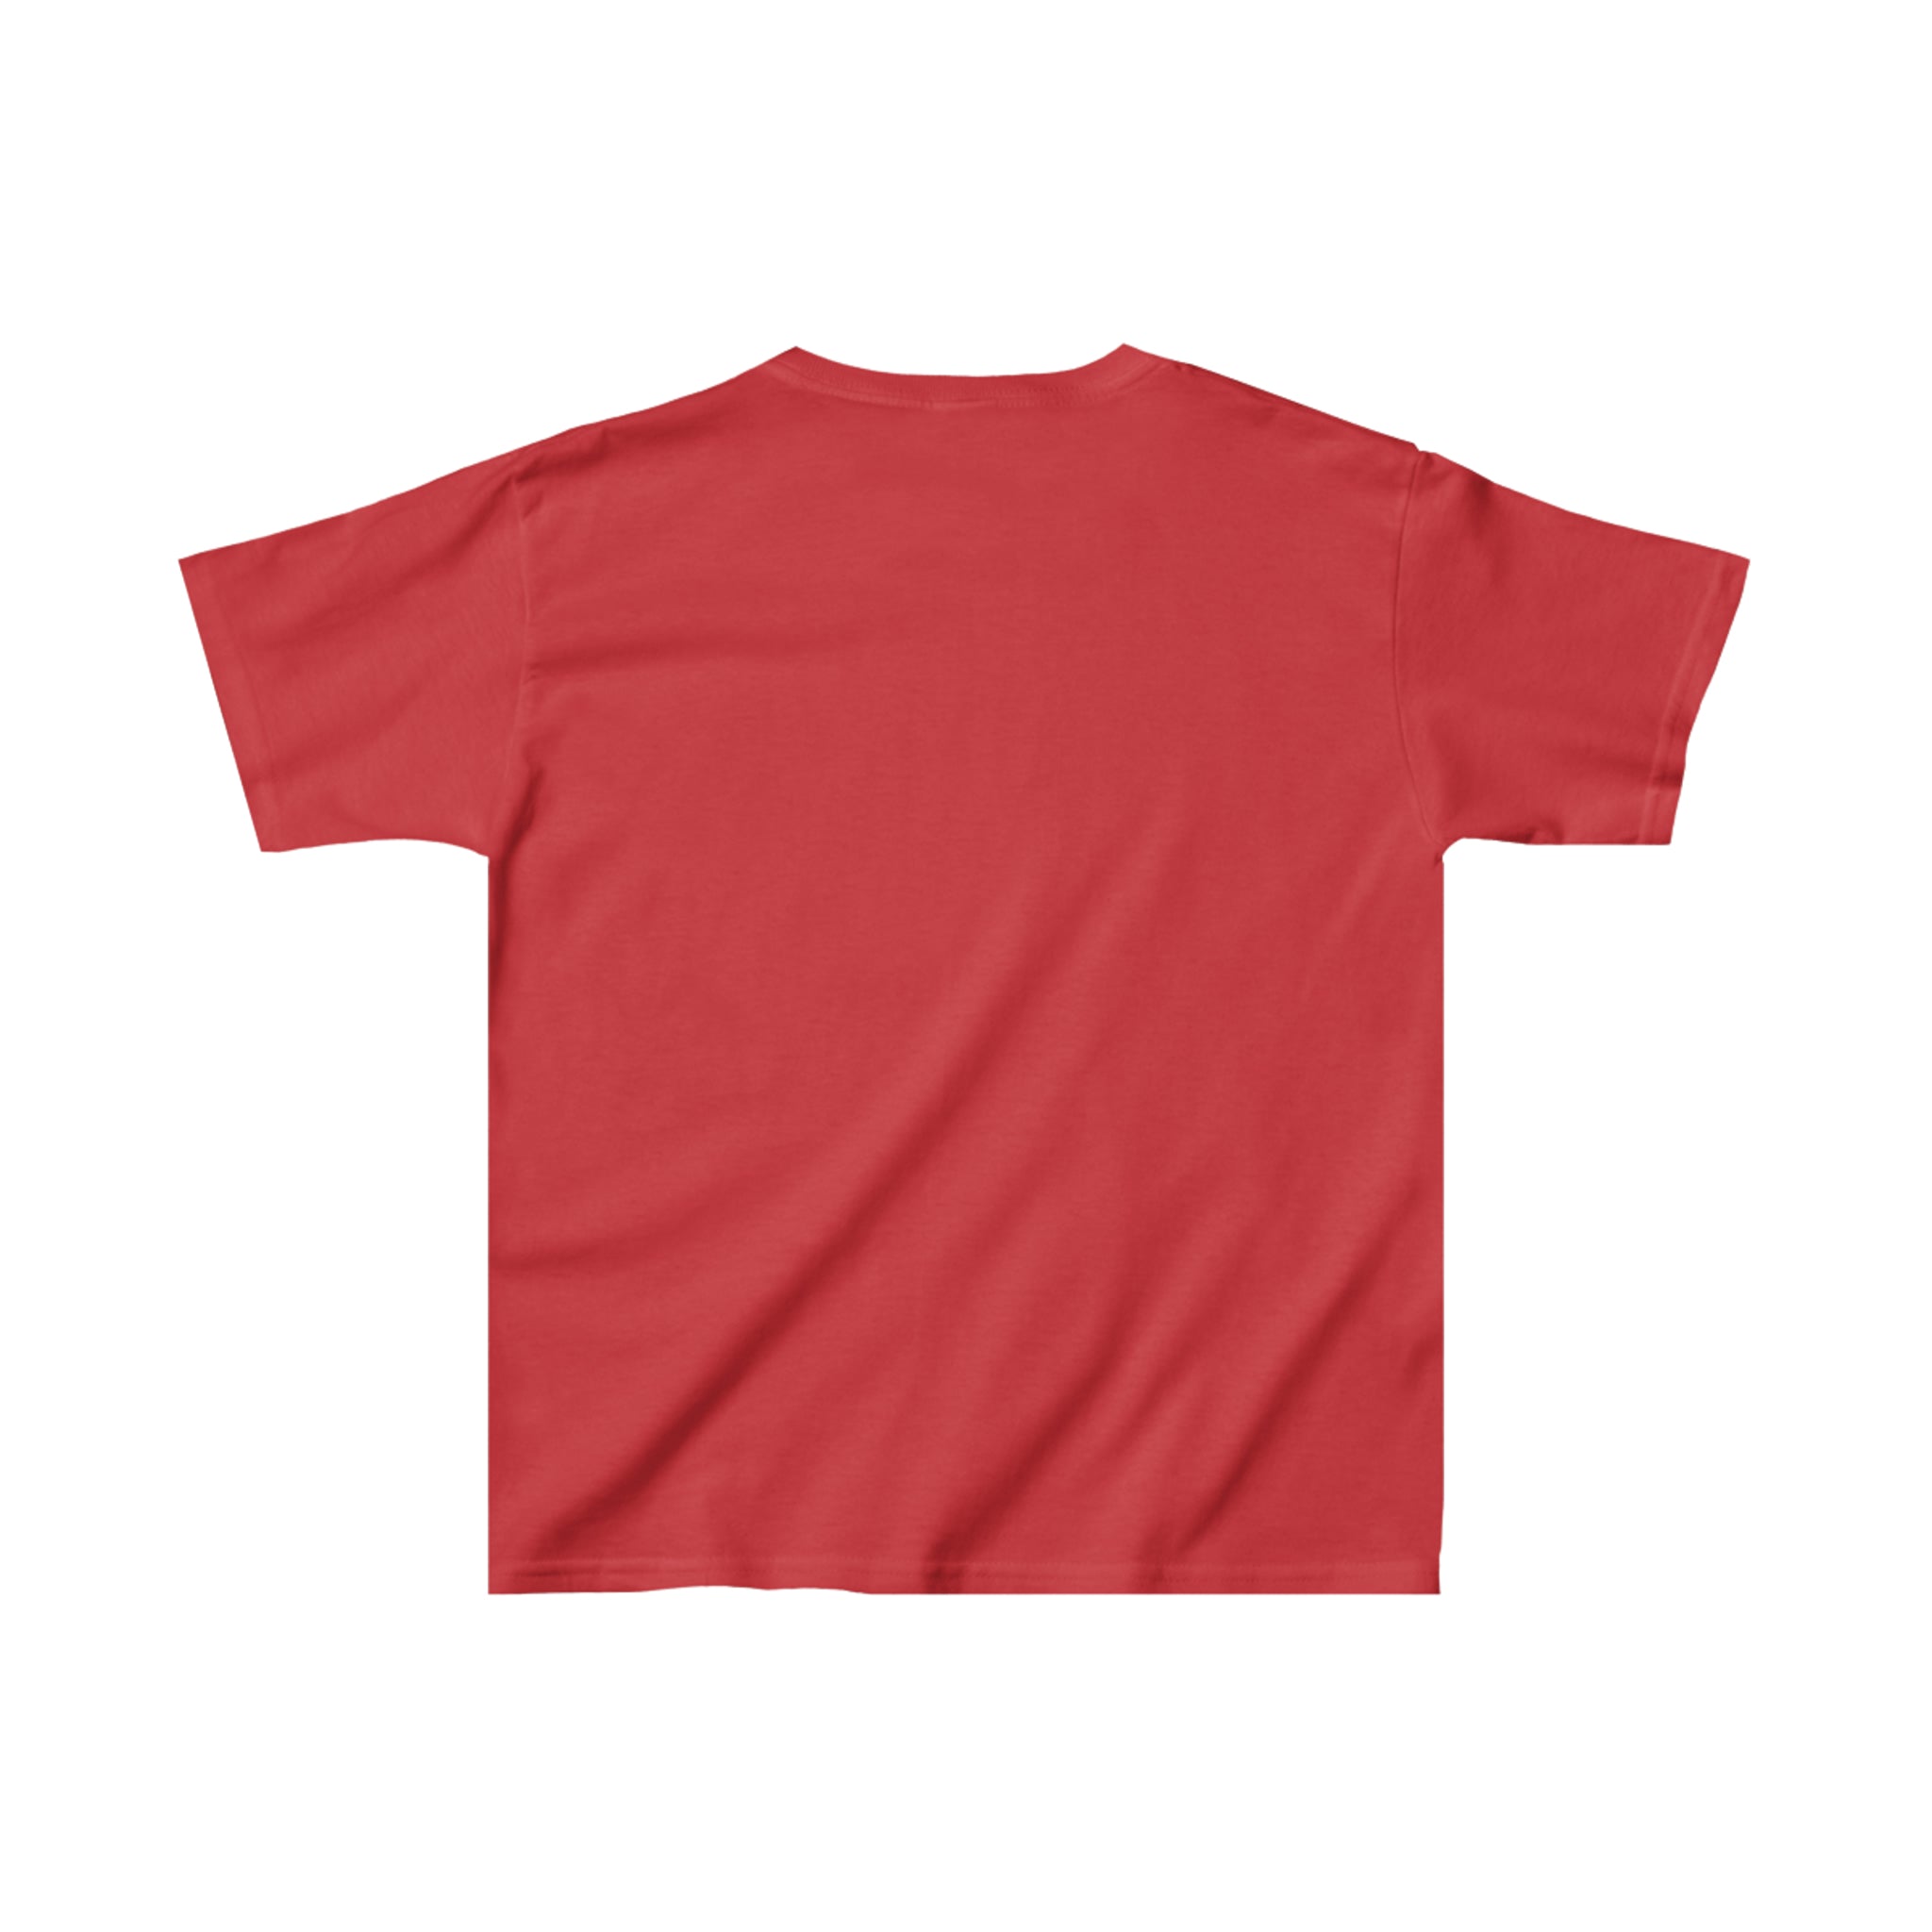 Wagon Wheel Cardinals T-Shirt (Youth)